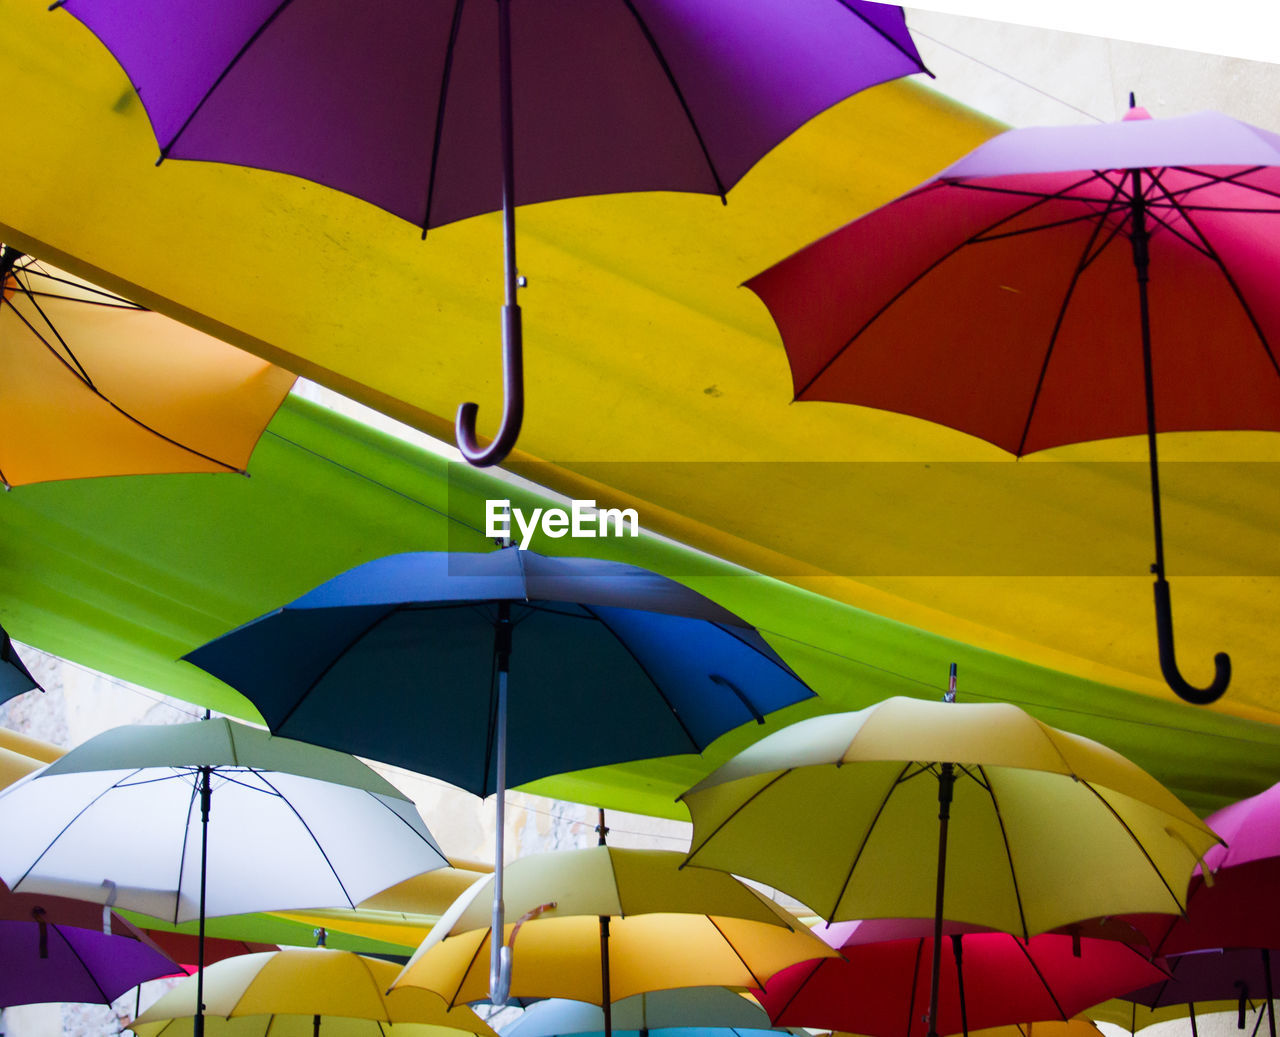 Rainbow umbrella festival hanging midair